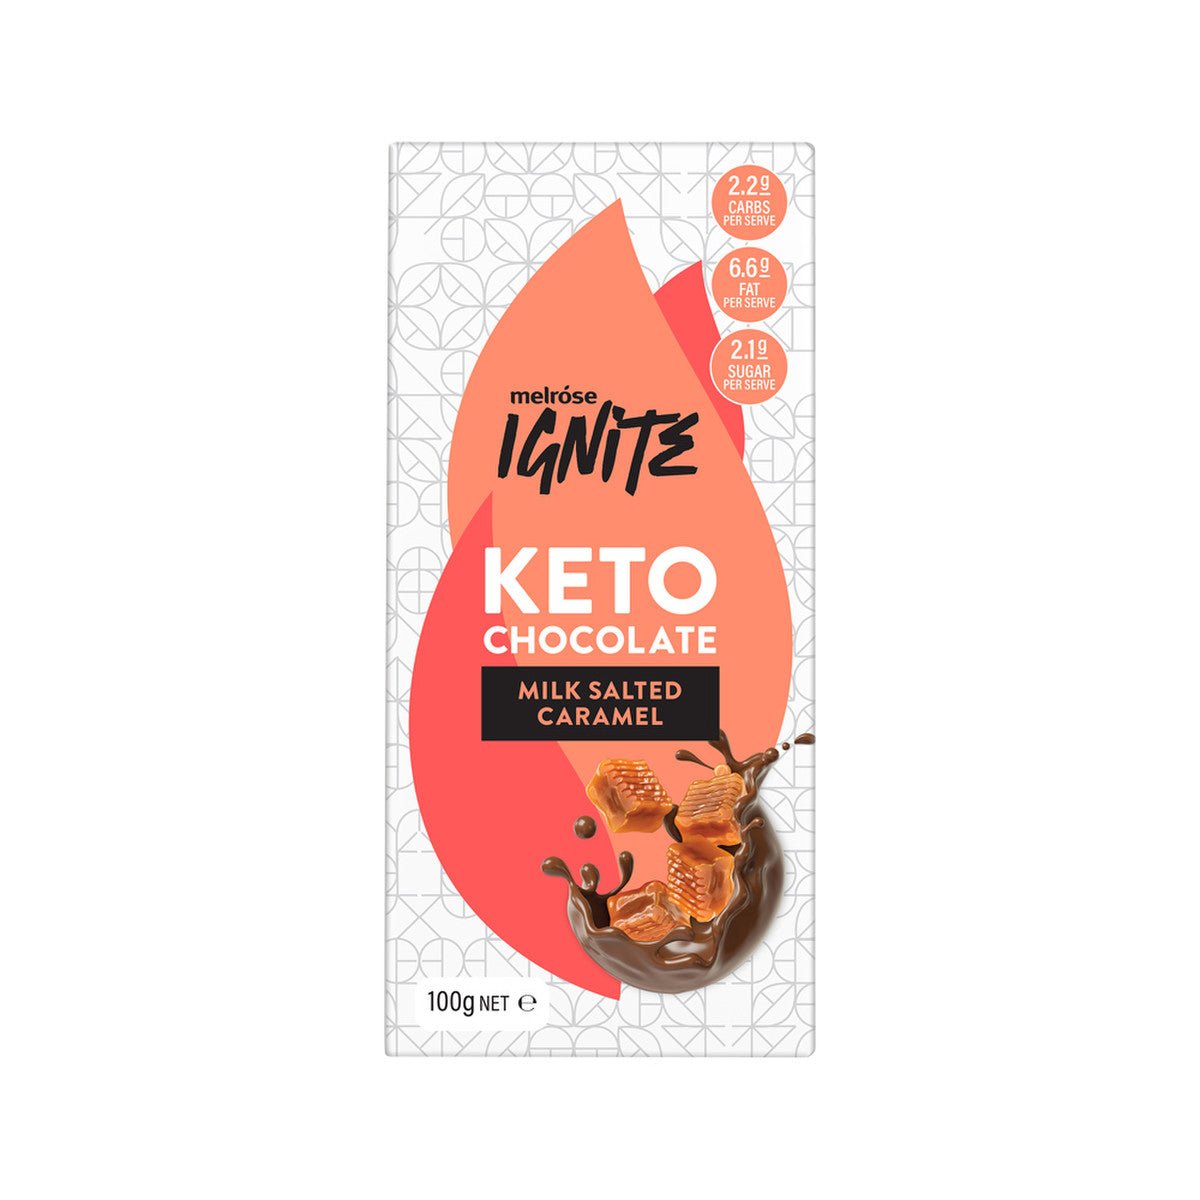 Keto Chocolate - Milk Salted Caramel - 100g - Yo Keto